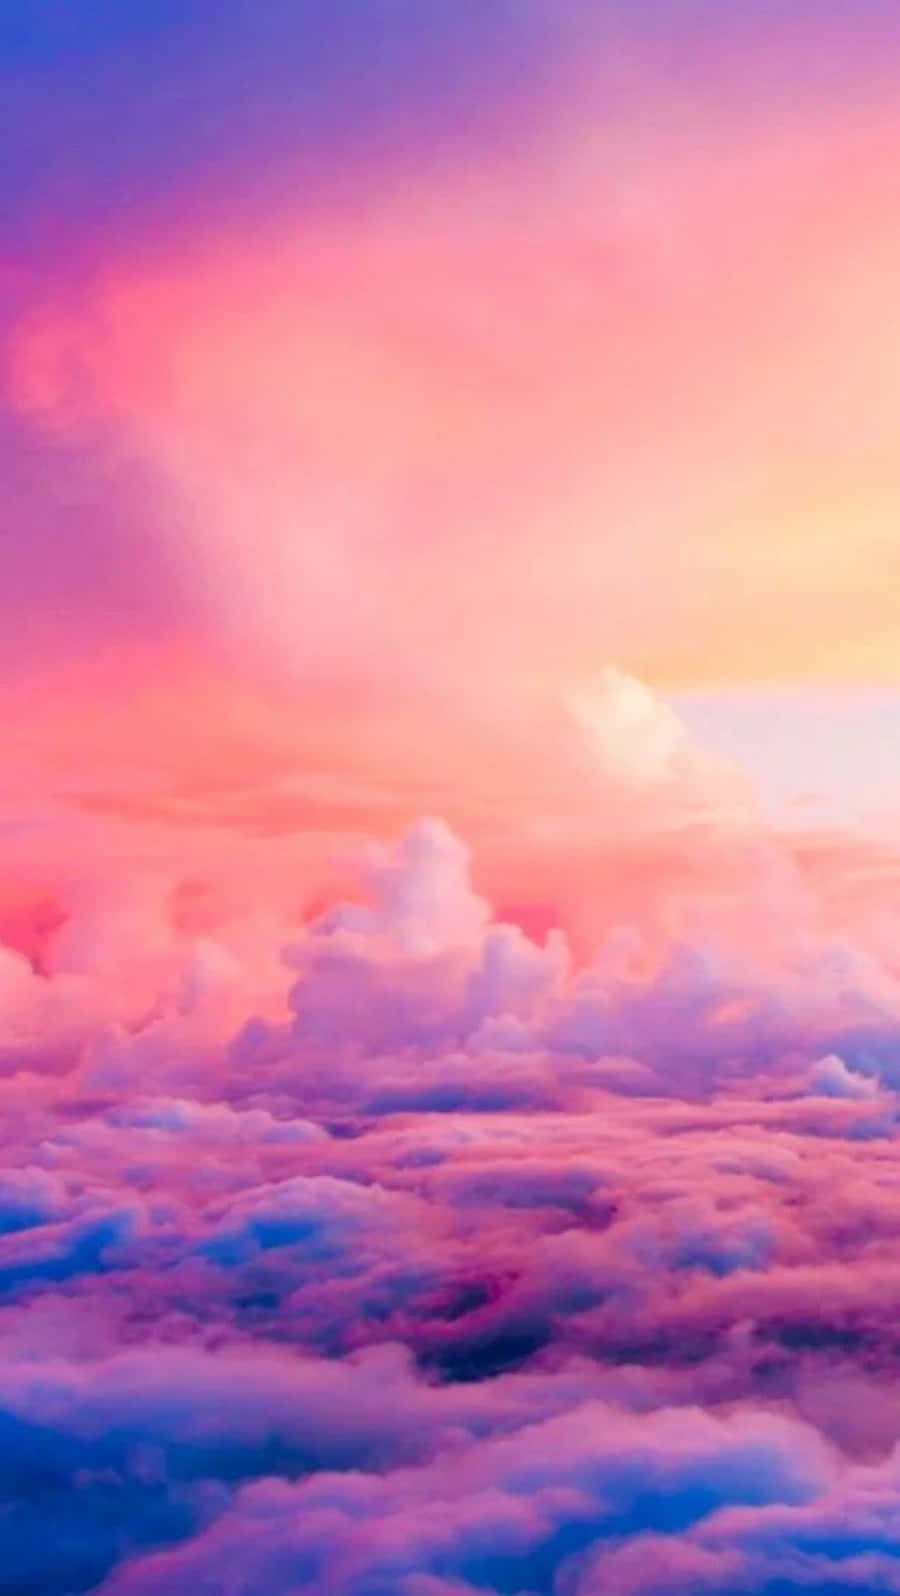 Download Mesmerizing Pink Sky at Sunset Wallpaper | Wallpapers.com